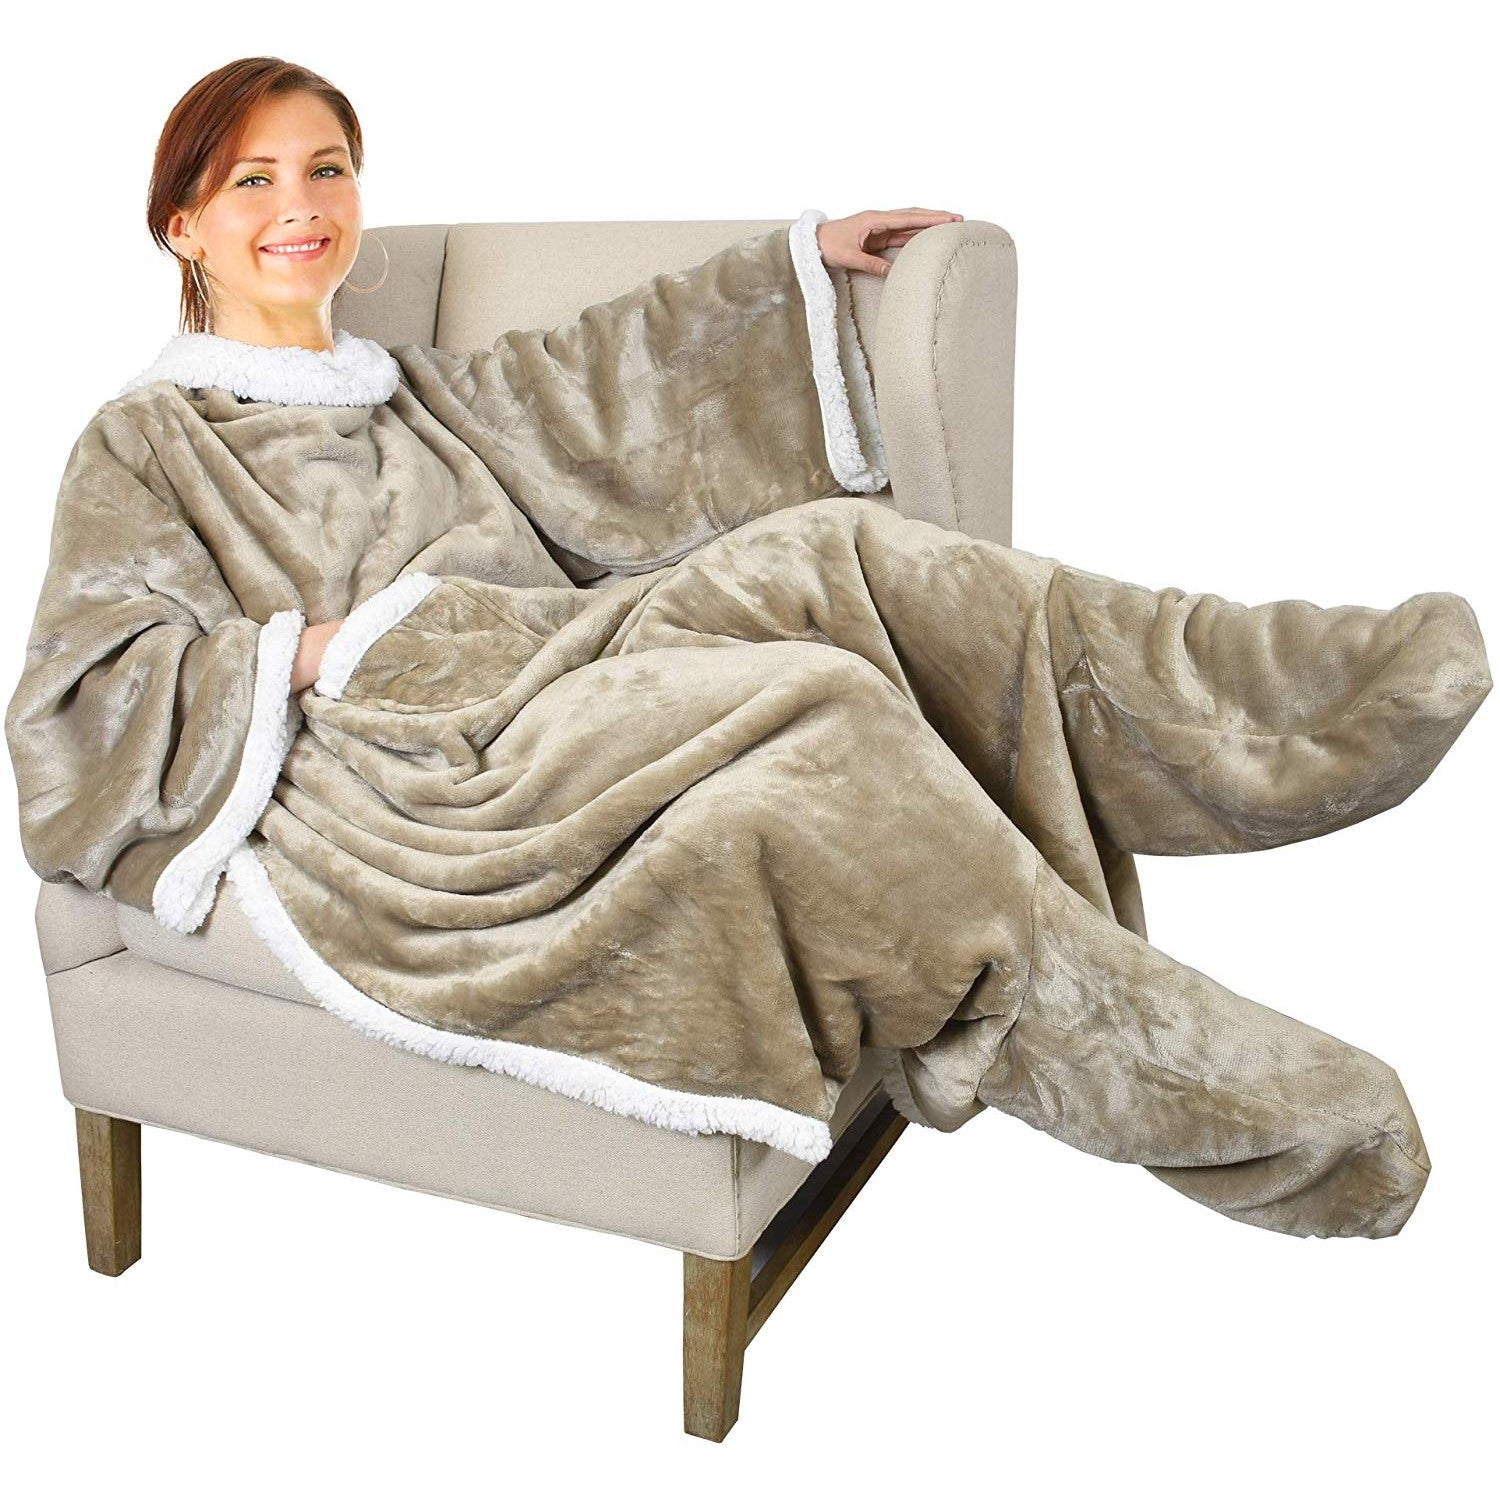 Wearable Sleeved Blanket - oddgifts.com